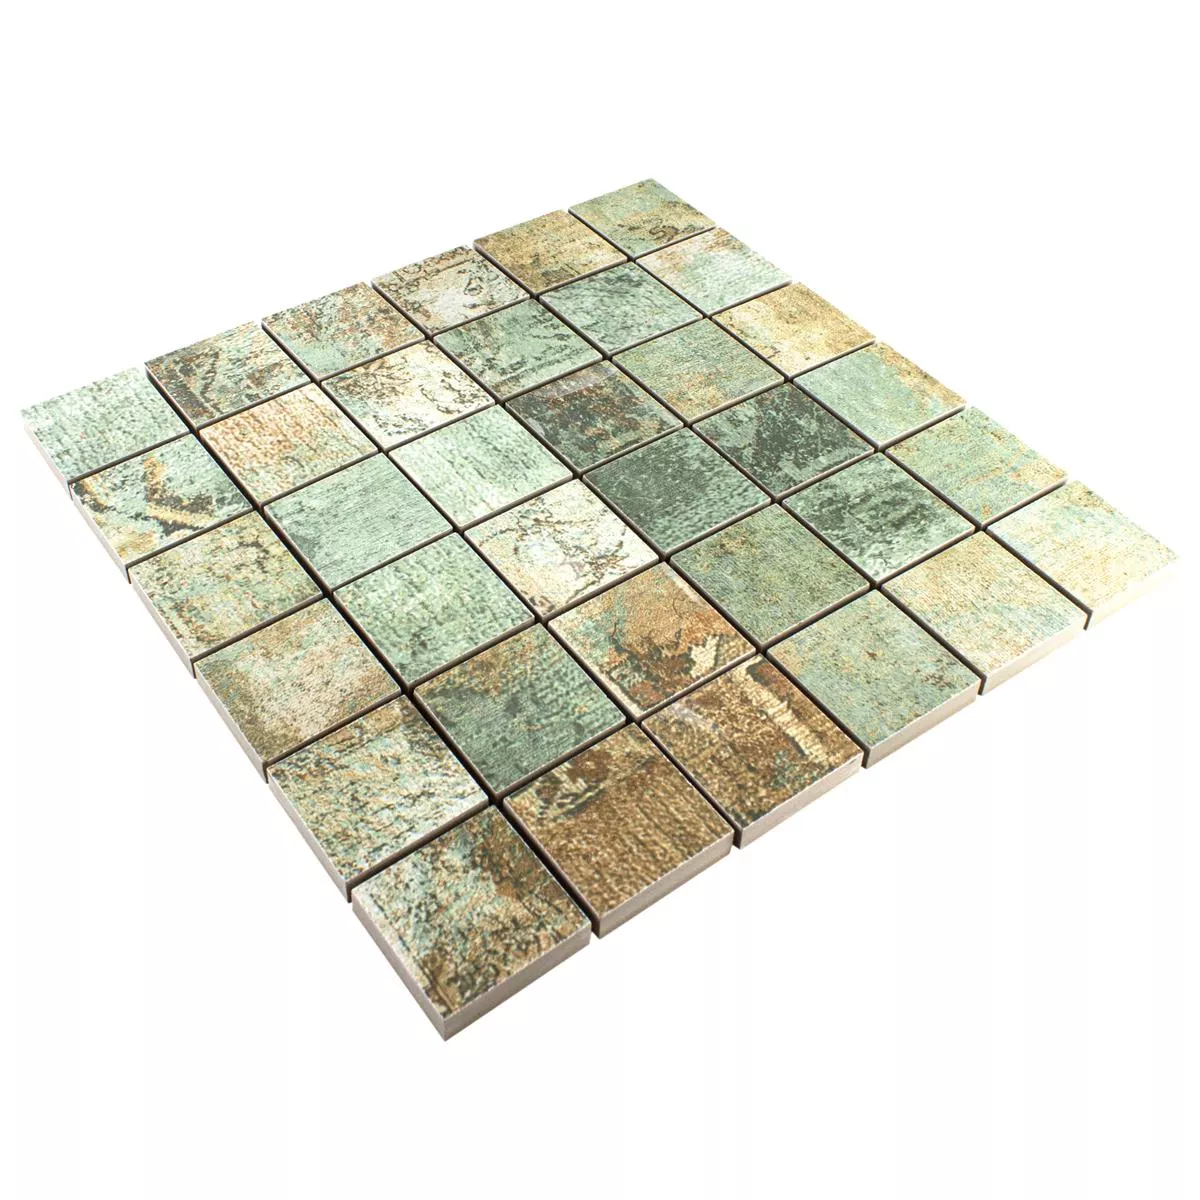 Ceramic Mosaic Tiles Moonlight Brown Green 47x47mm